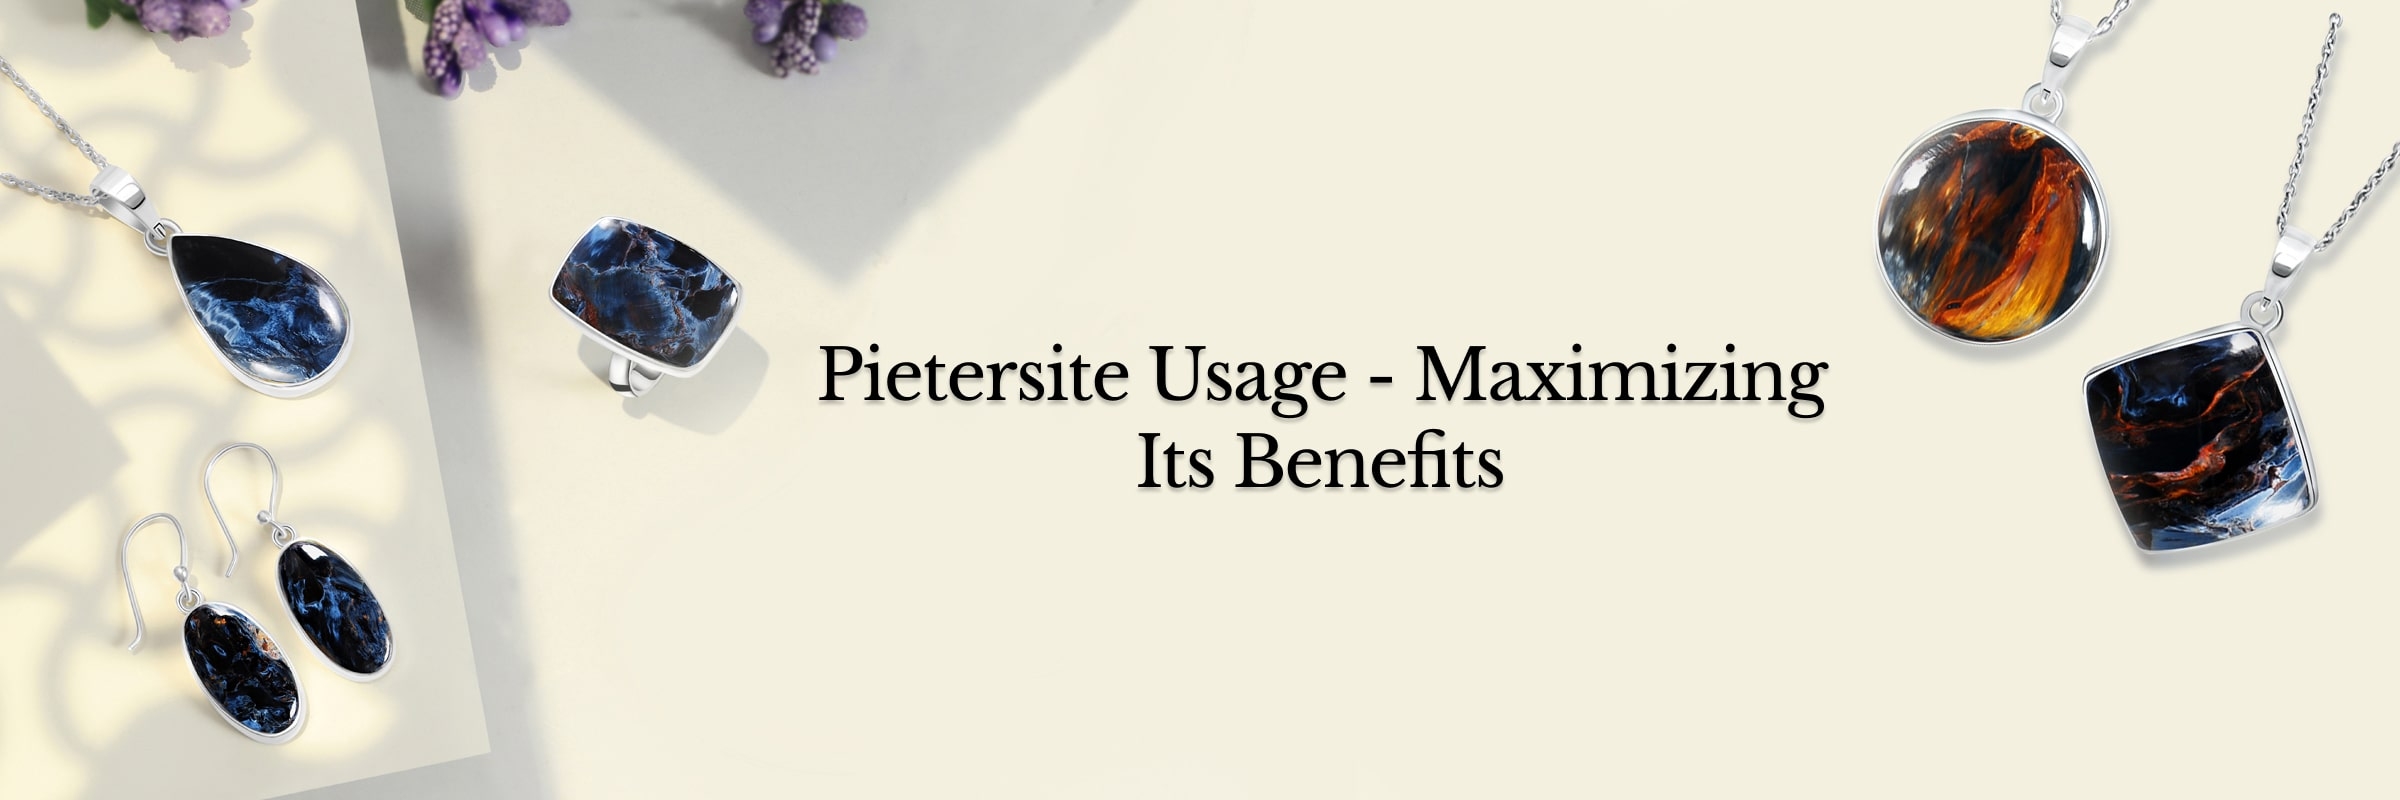 How To Use Pietersite